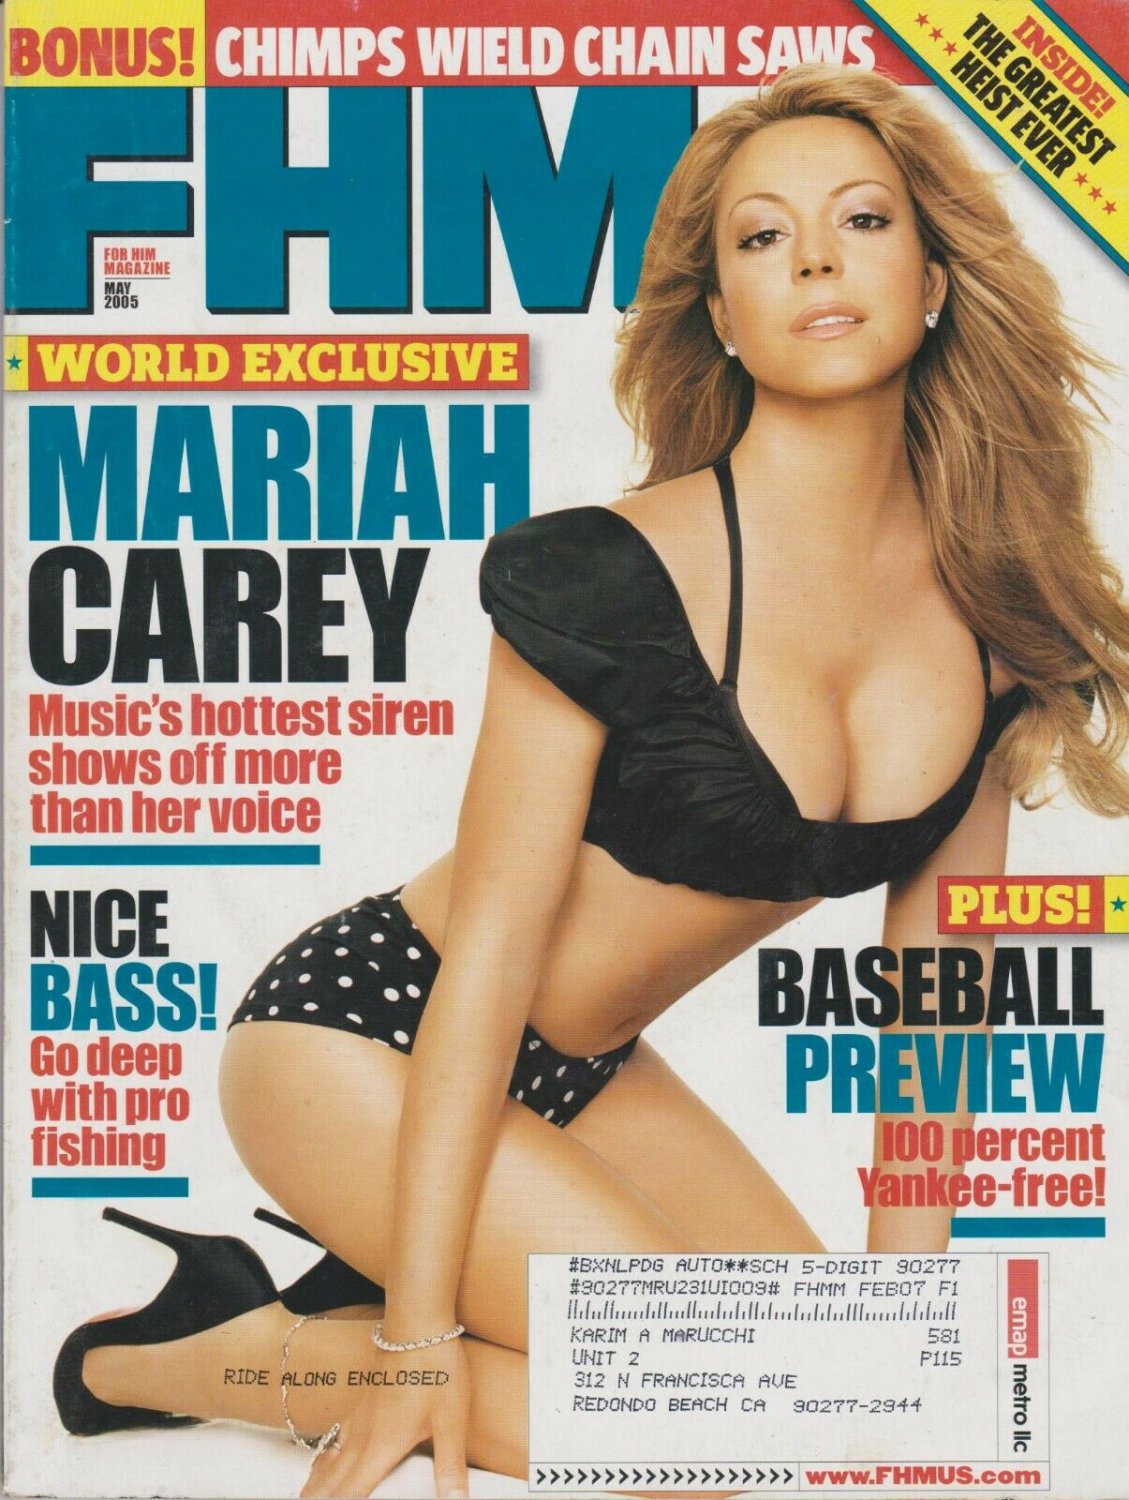 FHM MAGAZINE #56 MAY 2005-B - Mariah Carey Mayra Veronica